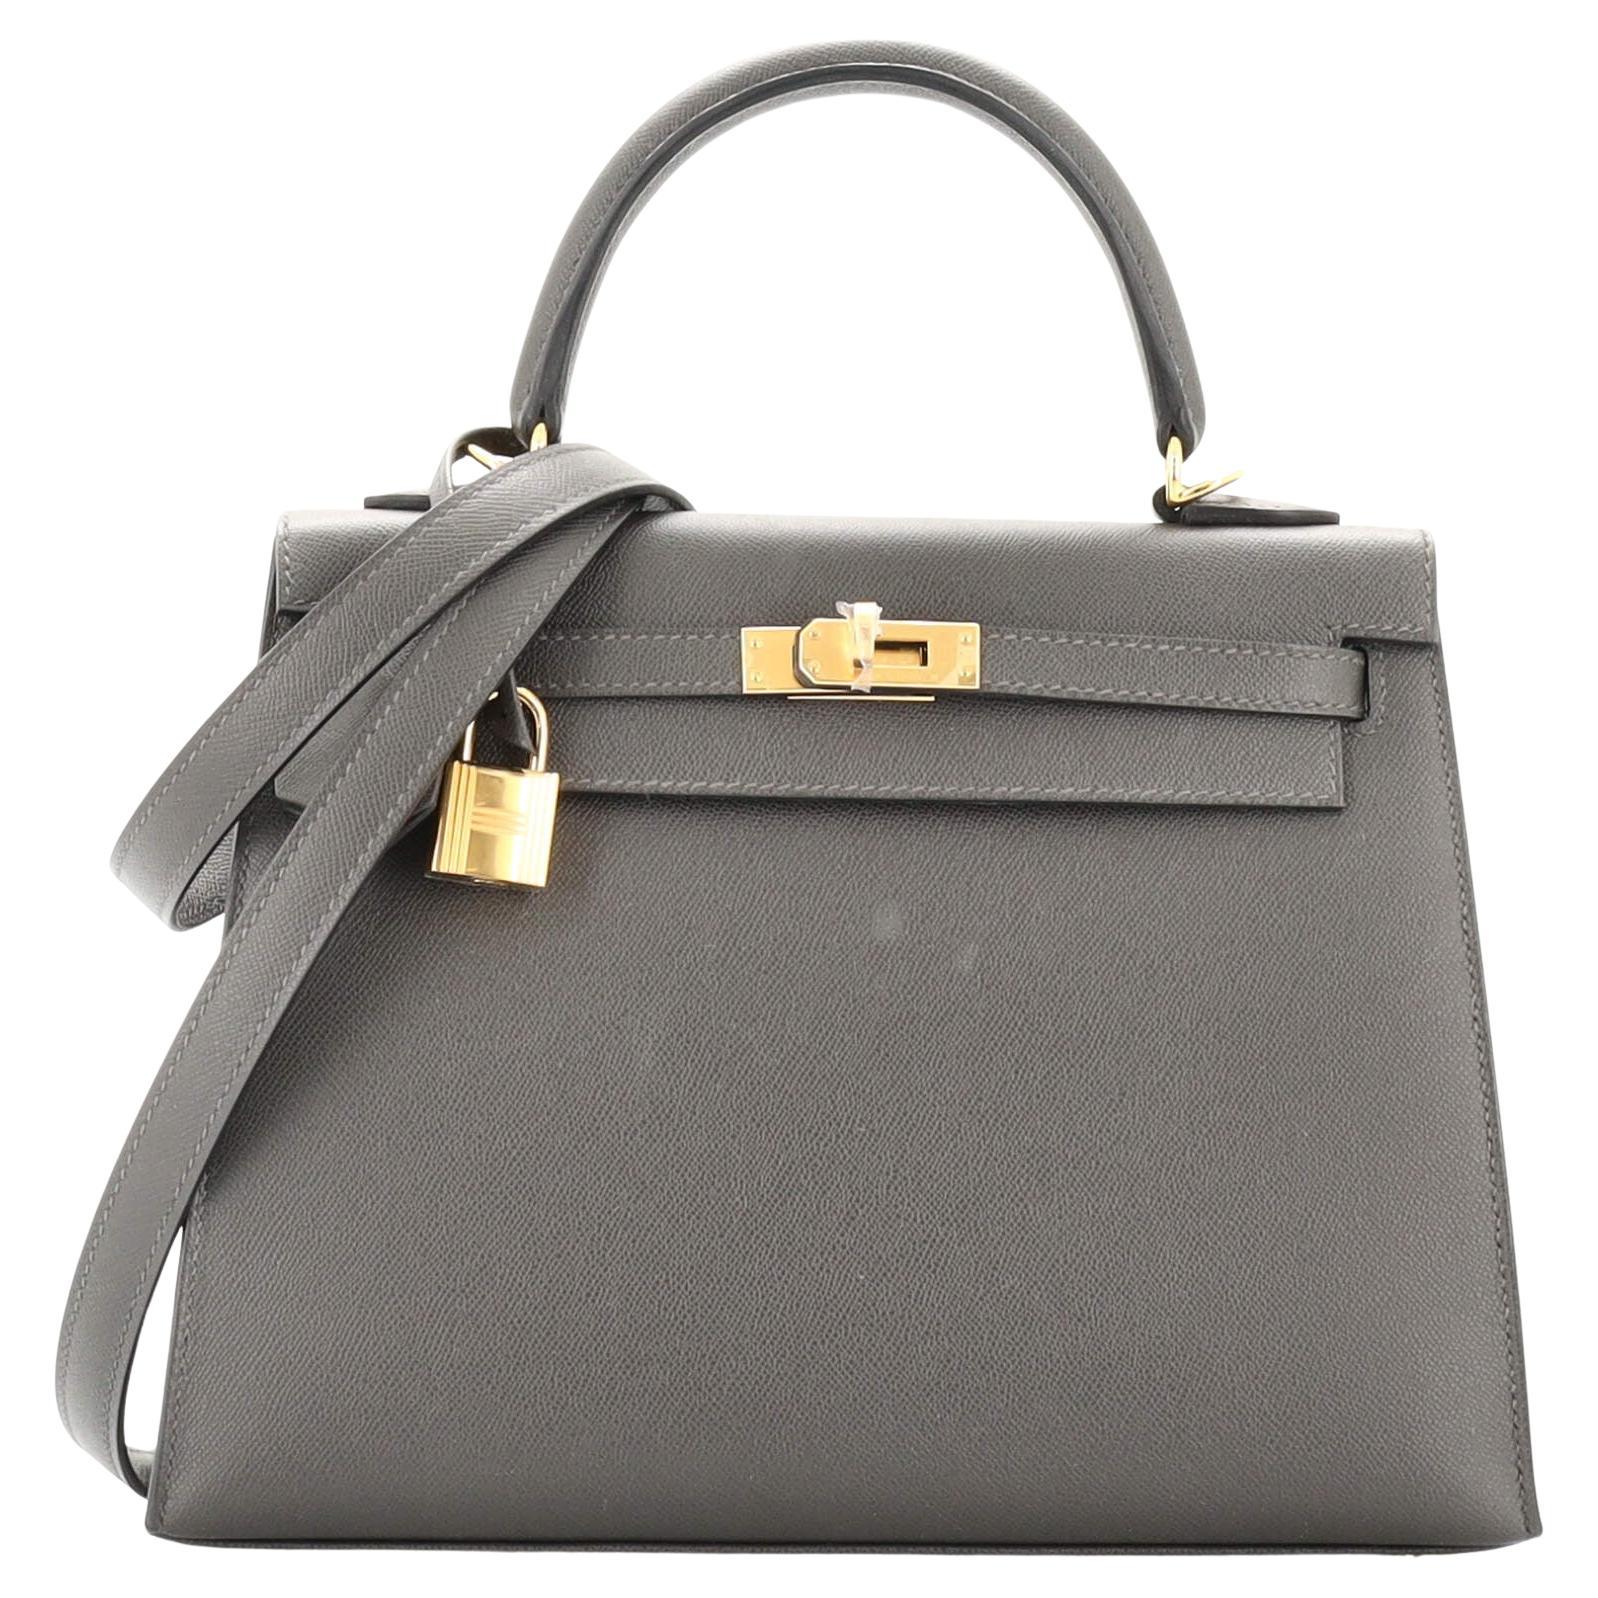 Hermes Kelly Handbag Grey Madame with Gold Hardware 25